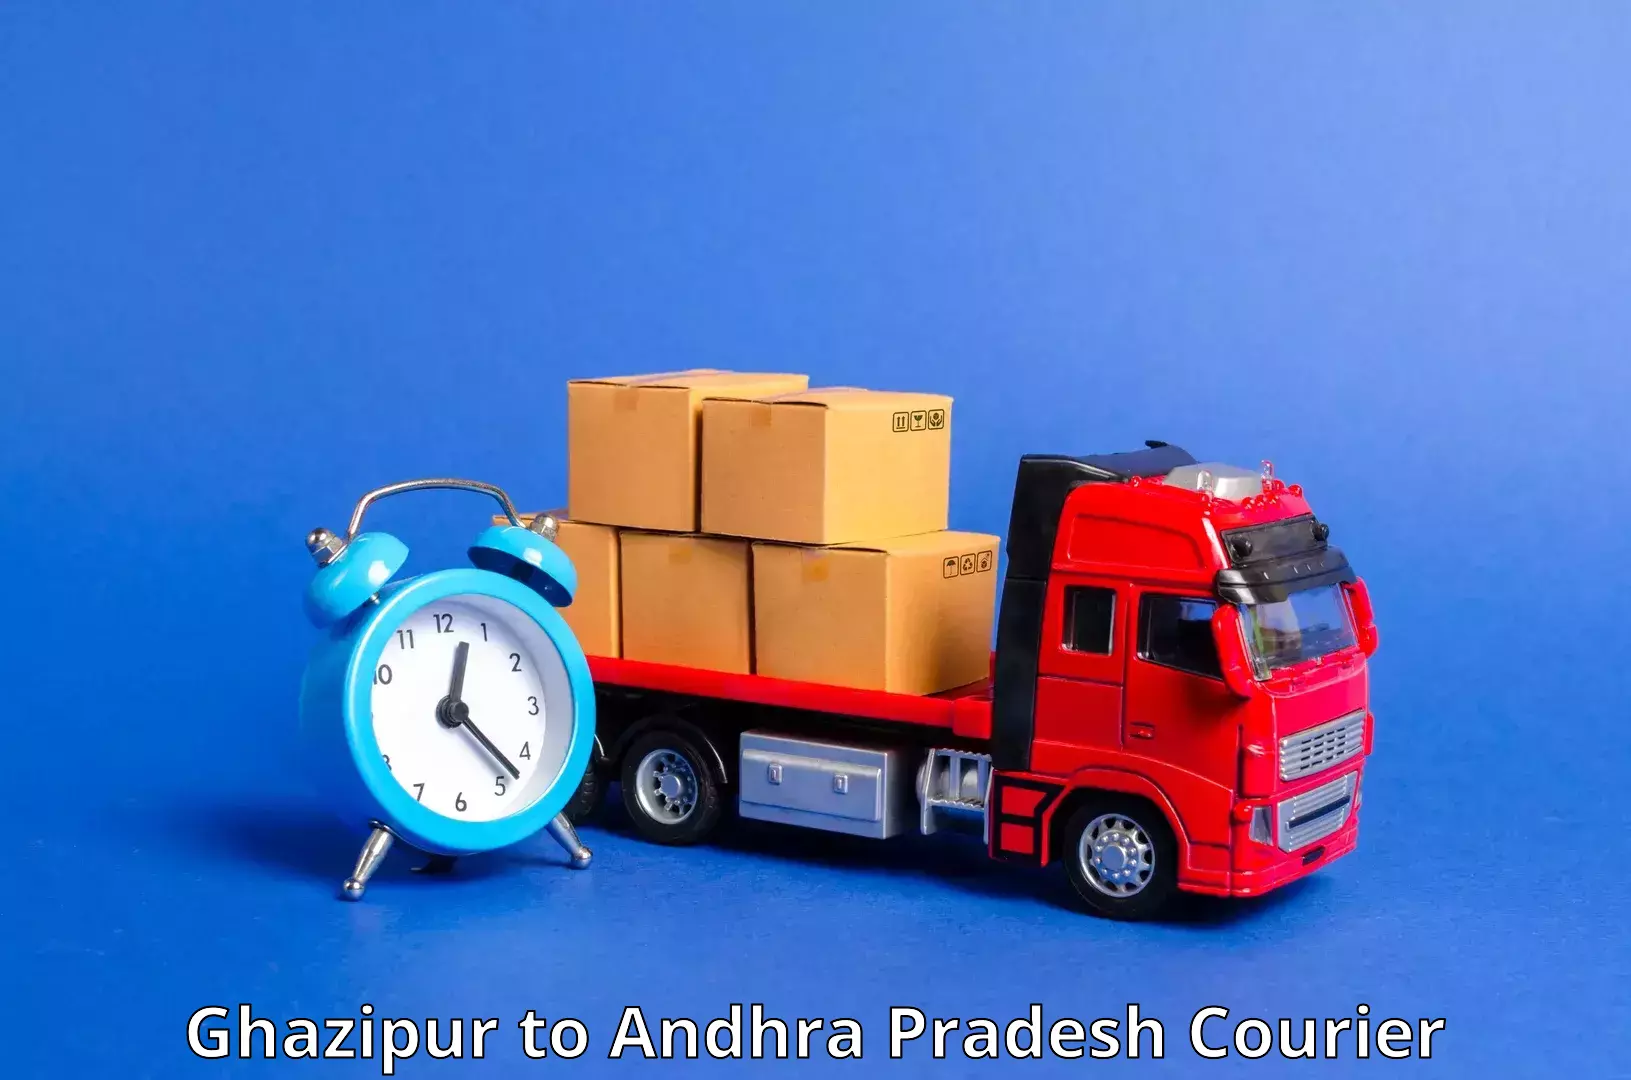 Reliable package handling in Ghazipur to Changaroth